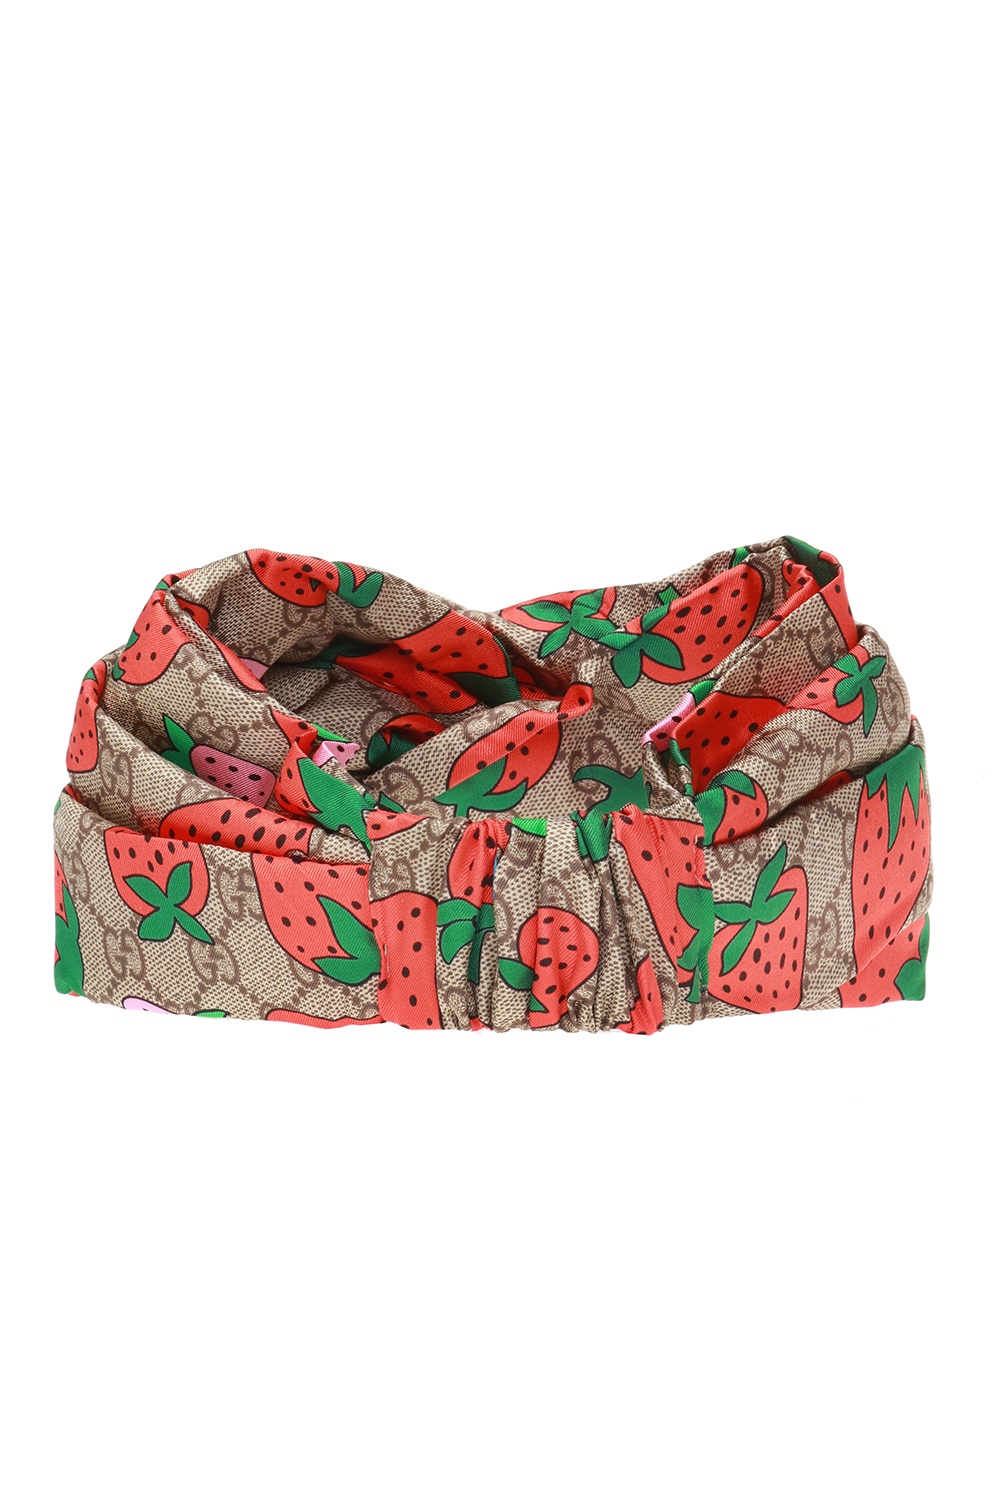 floral gucci headband